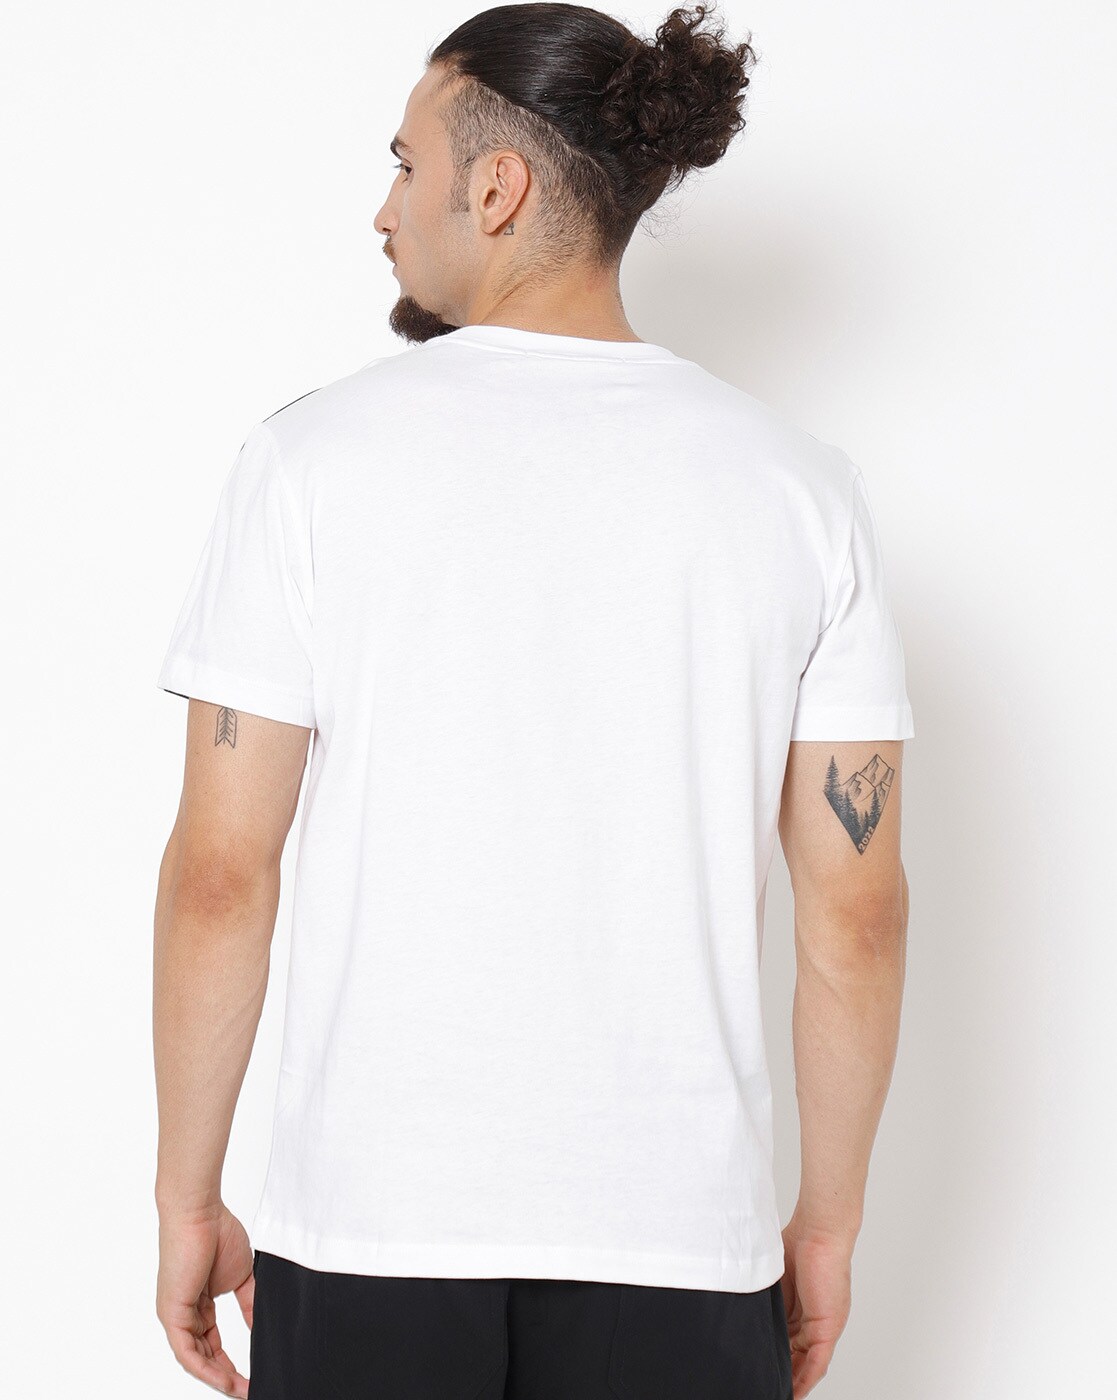 White t-shirt - Xtravagant